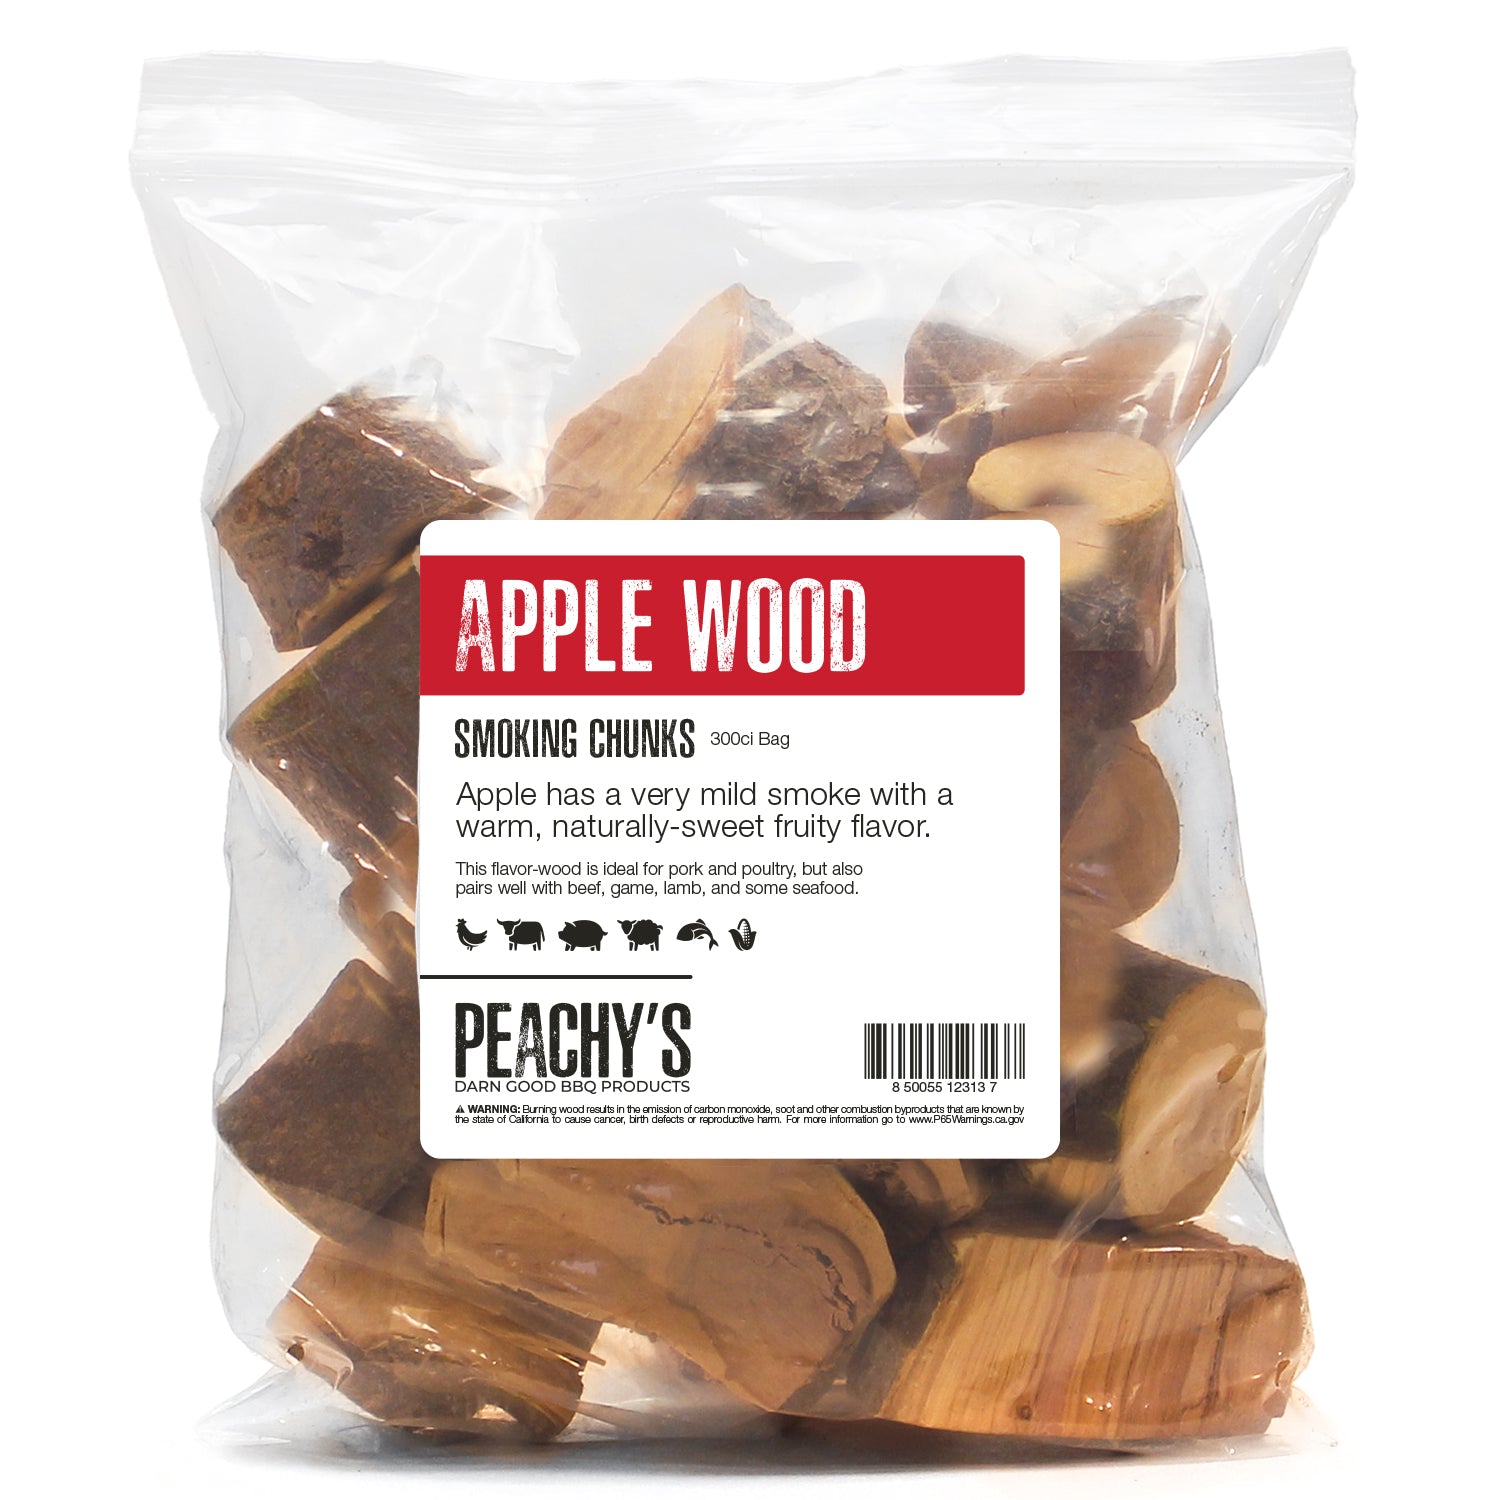 APPLE Chunks | 300ci Bag of Premium Smoking Woods by PEACHY'S